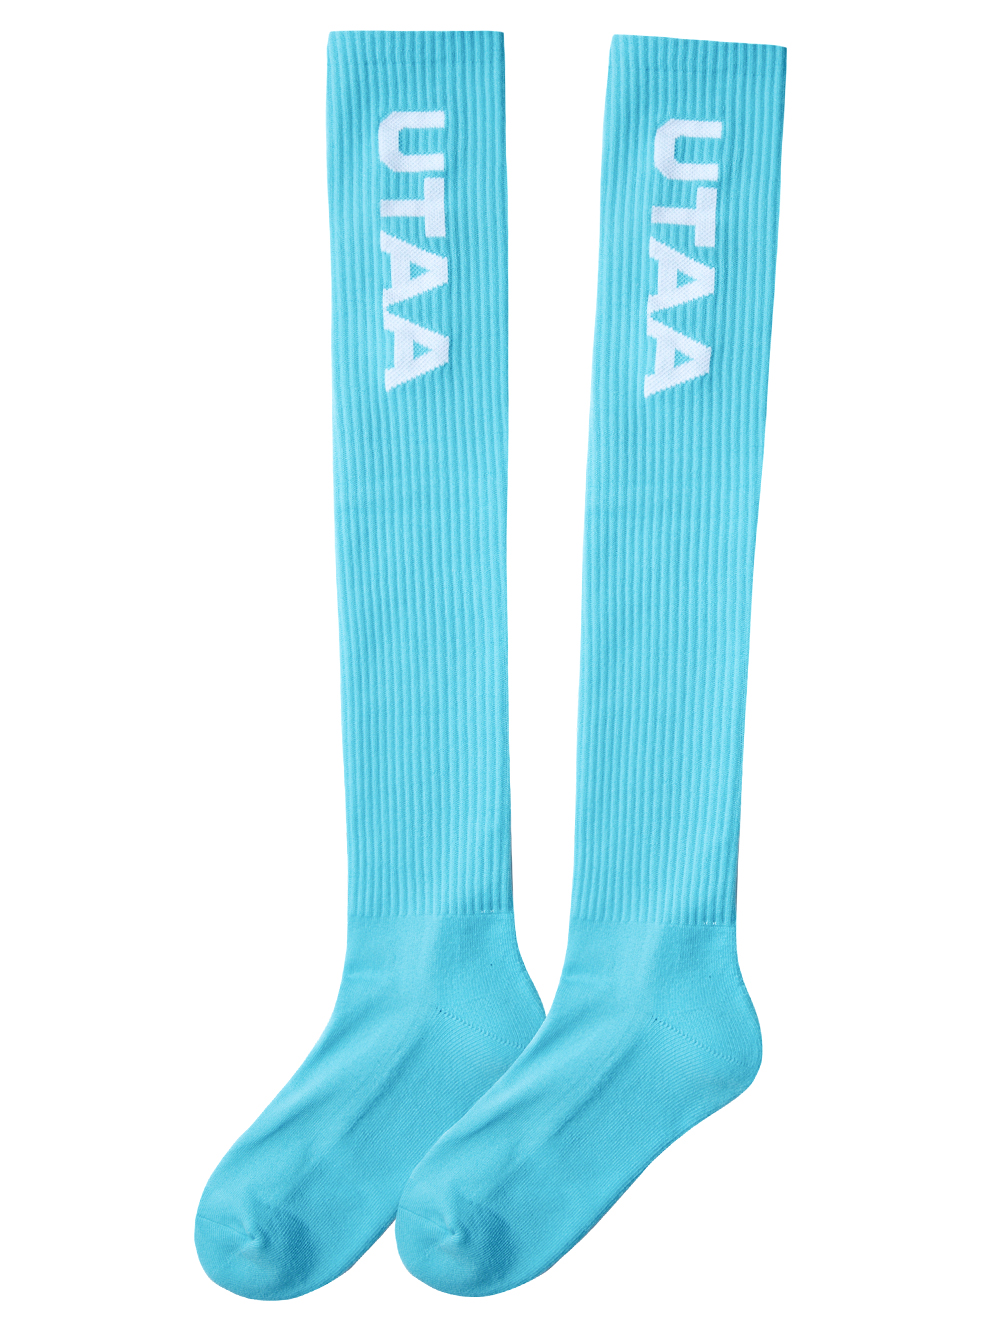 UTAA Logo Knee Socks : Mint  (UC0GSF141MT)